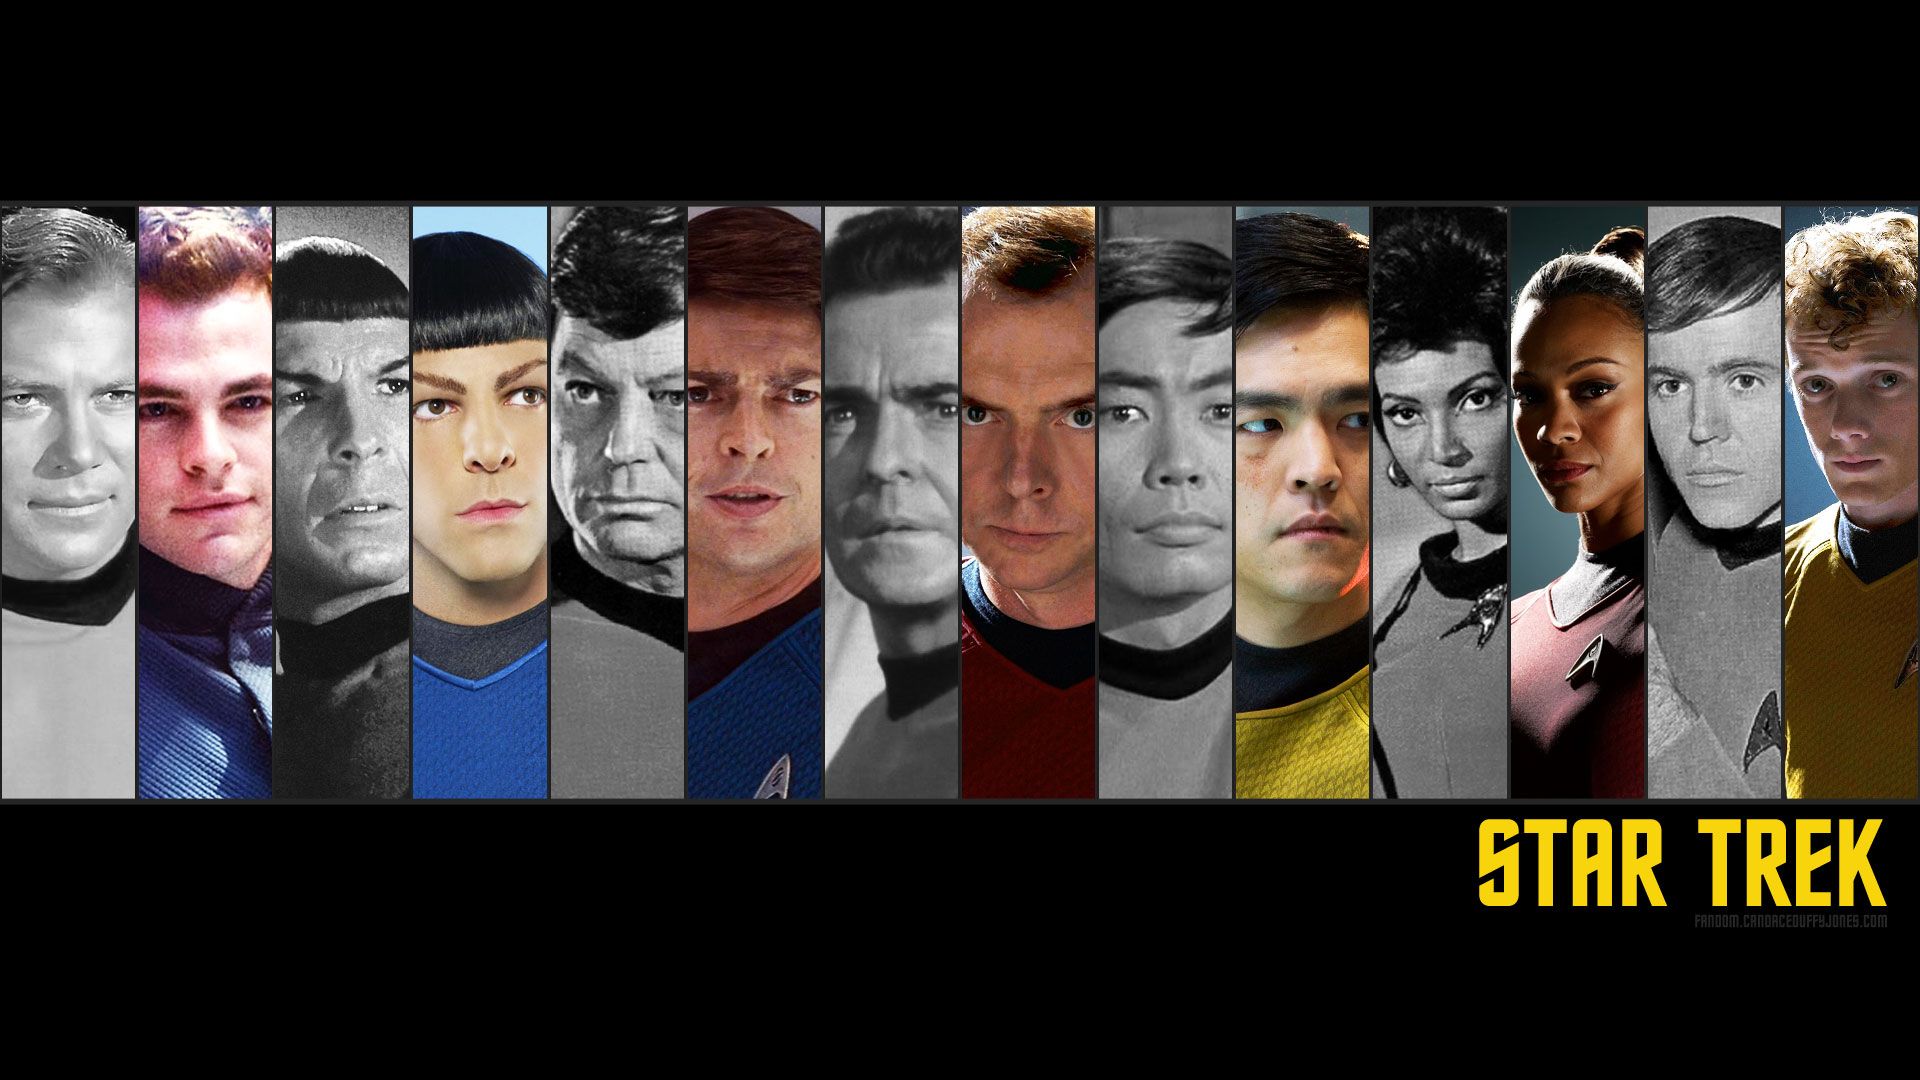 Star Trek Wallpaper - Star Trek Wallpaper (32292834) - Fanpop